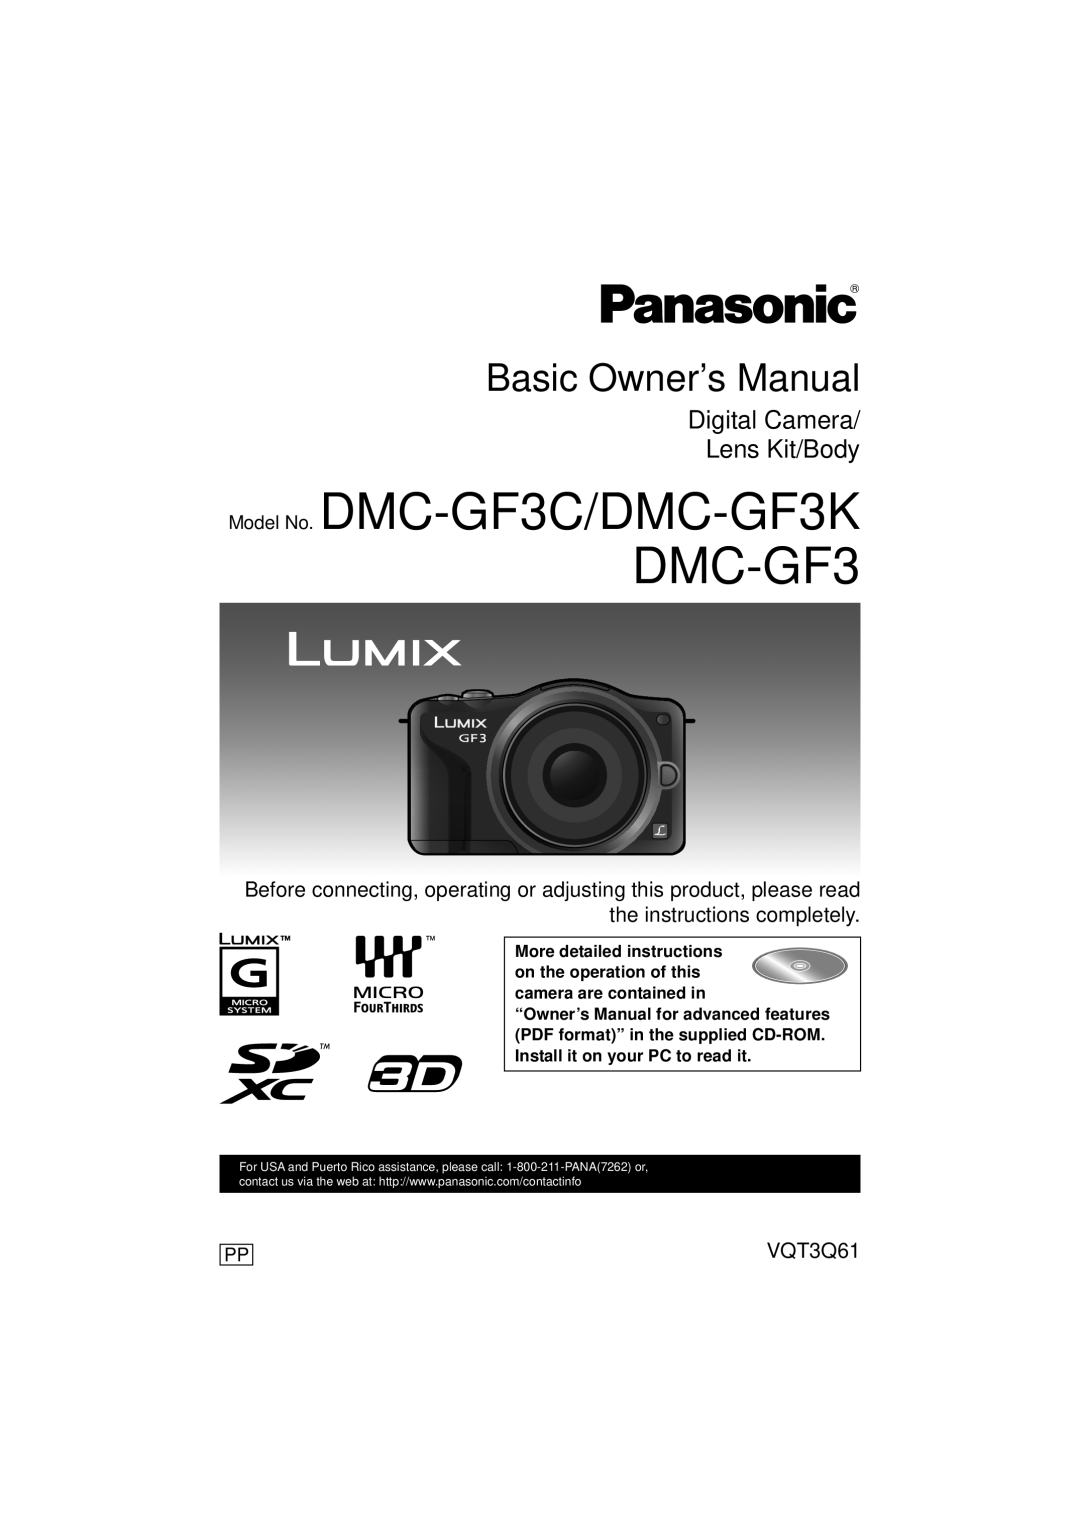 Panasonic DMC-GF3XK owner manual More detailed instructions, Model No. DMC-GF3C/DMC-GF3K DMC-GF3, Basic Owner’s Manual 